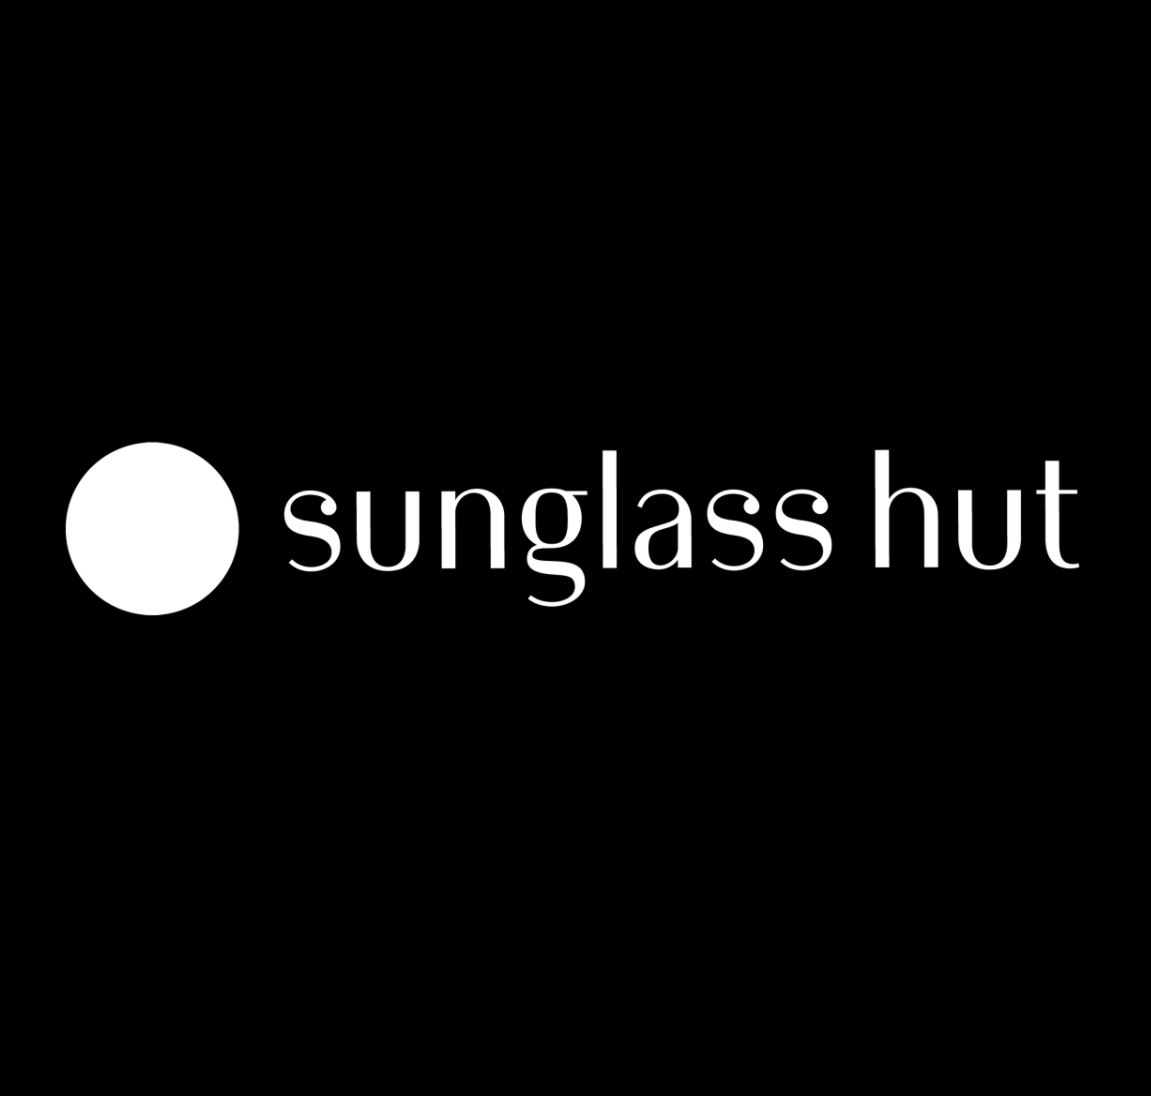 Sunglasshut logo